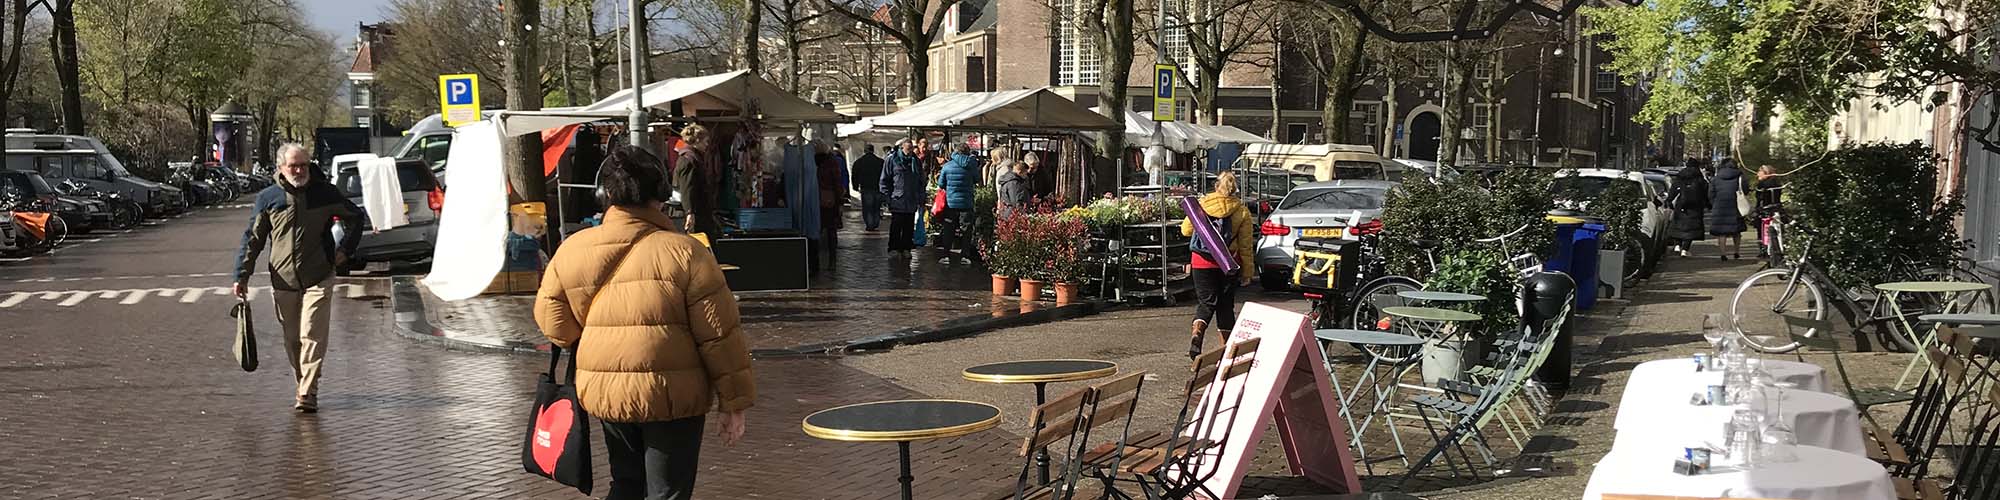 https://www.noordermarkt-amsterdam.nl/uploads/images/fotostroke/Omgeving-1.jpg